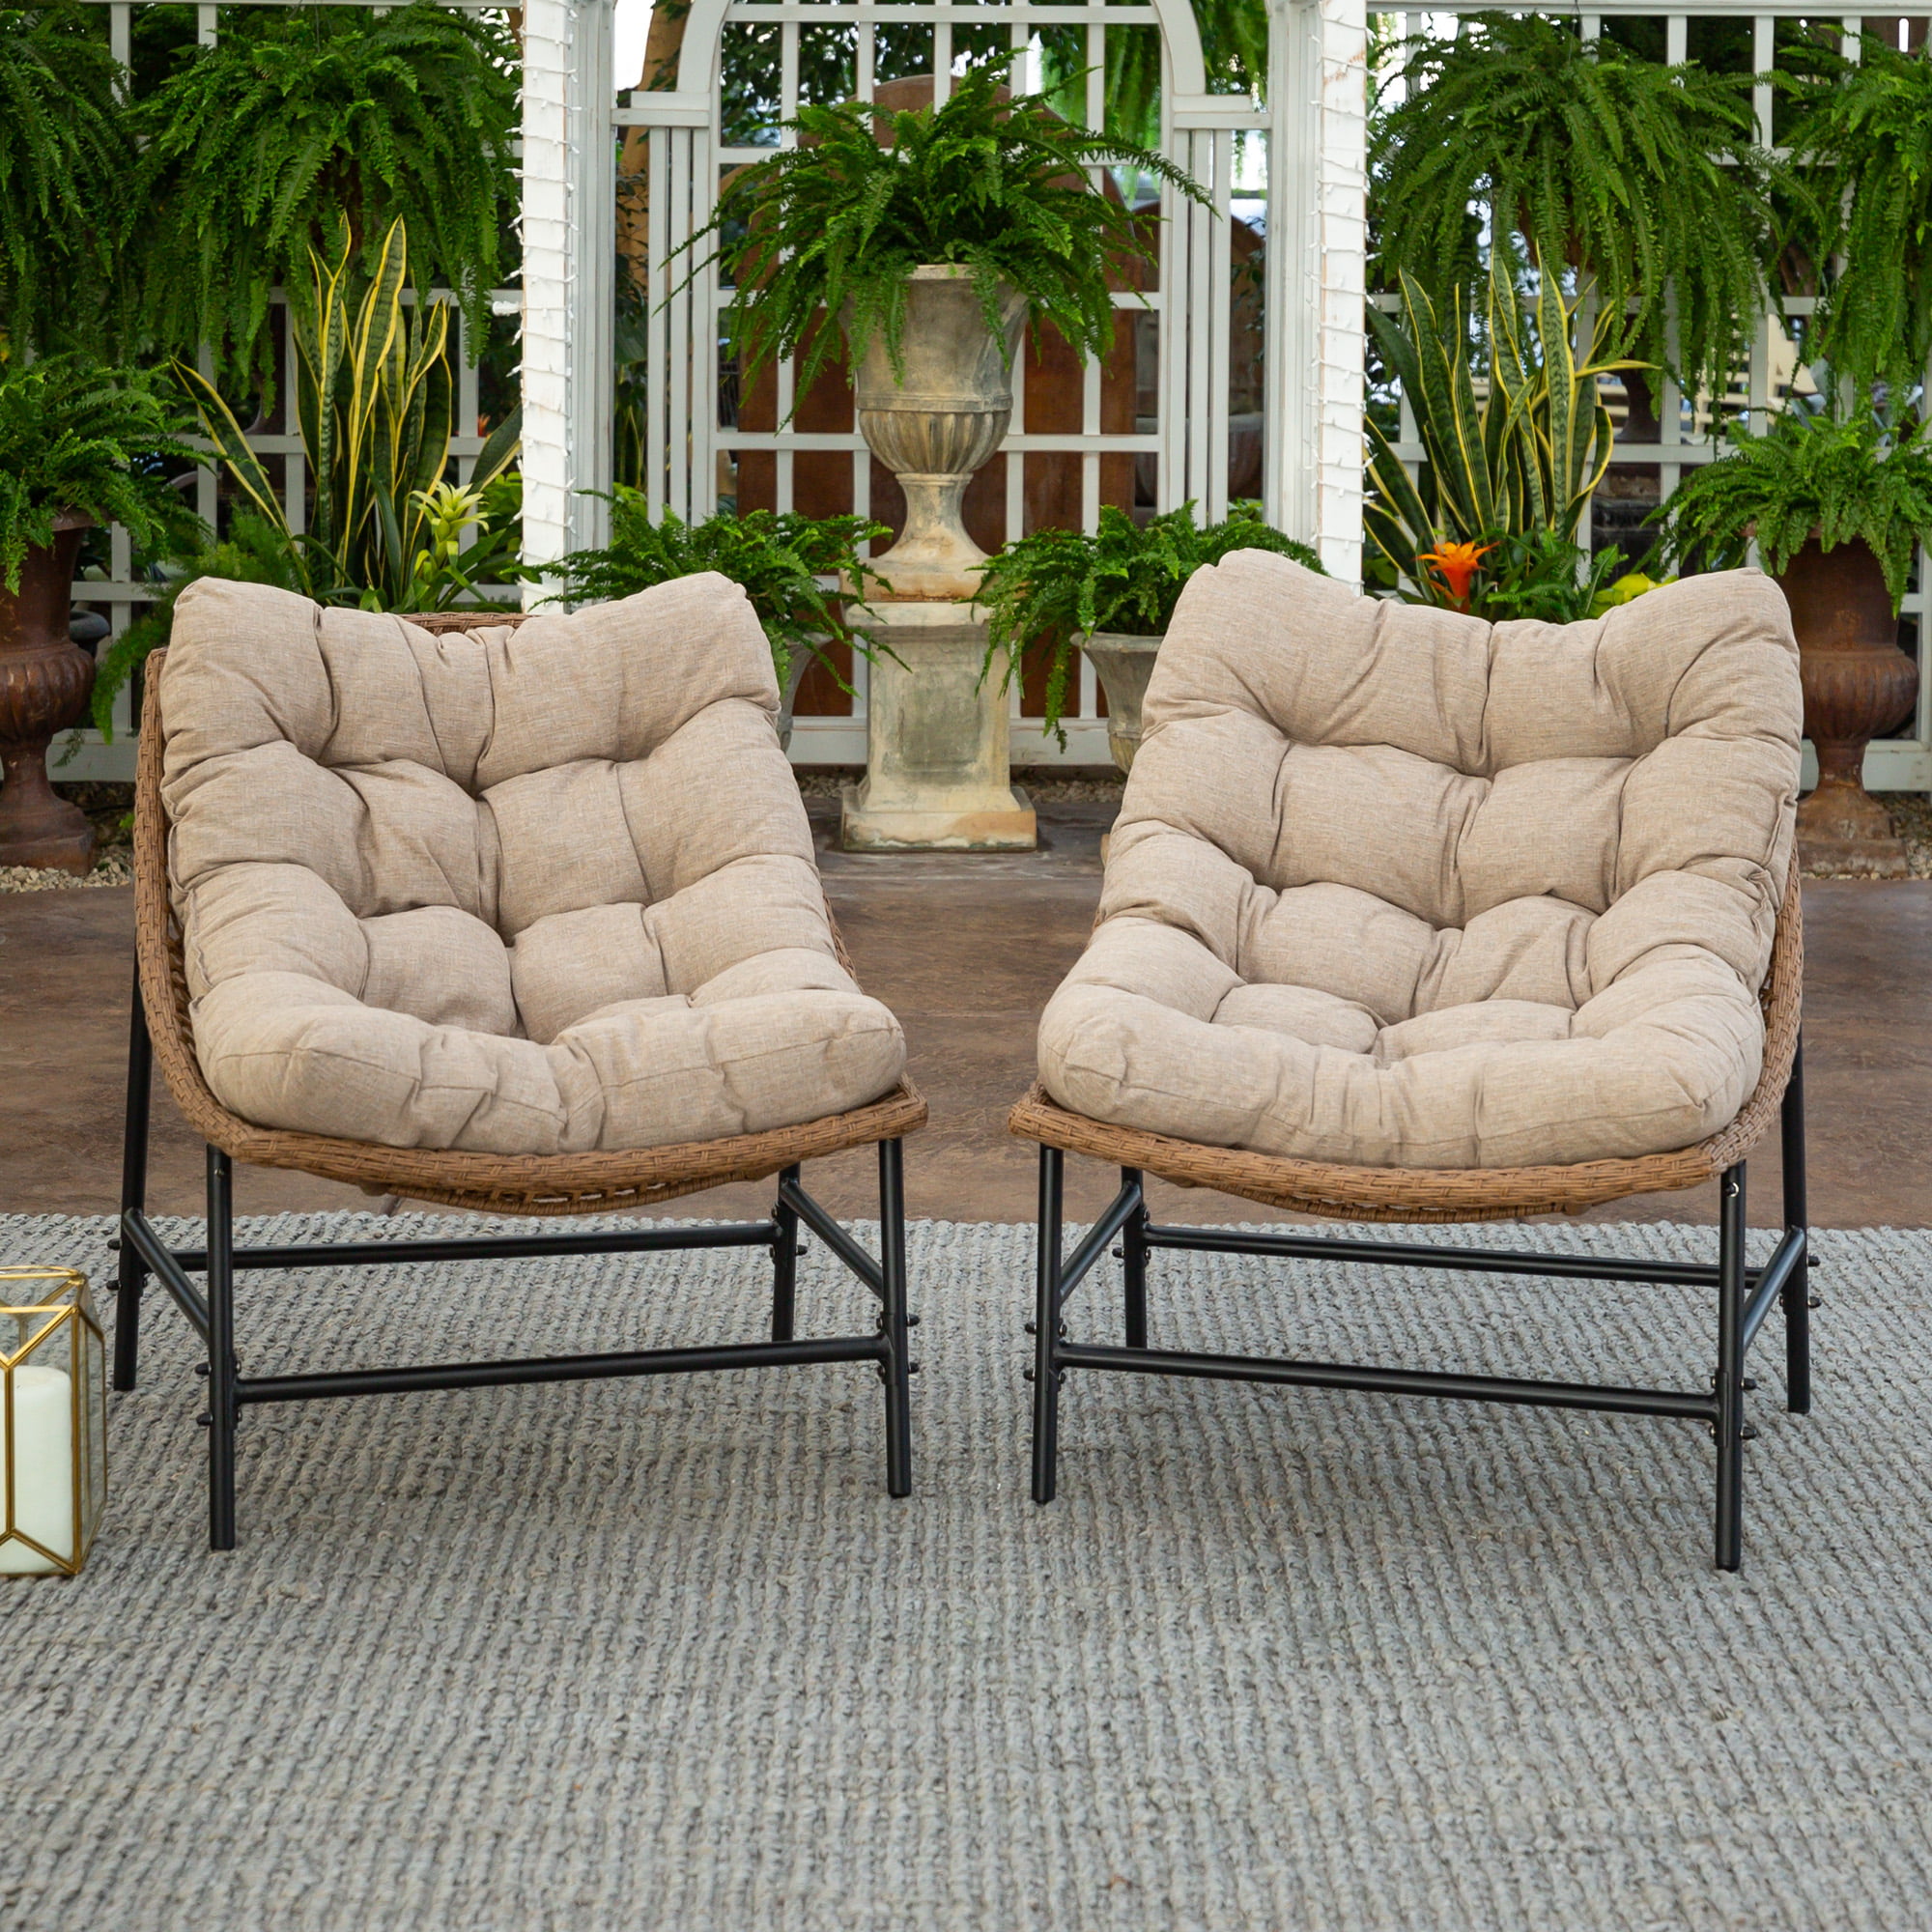 Manor Park Outdoor Patio Papasan Chairs, Set of 2